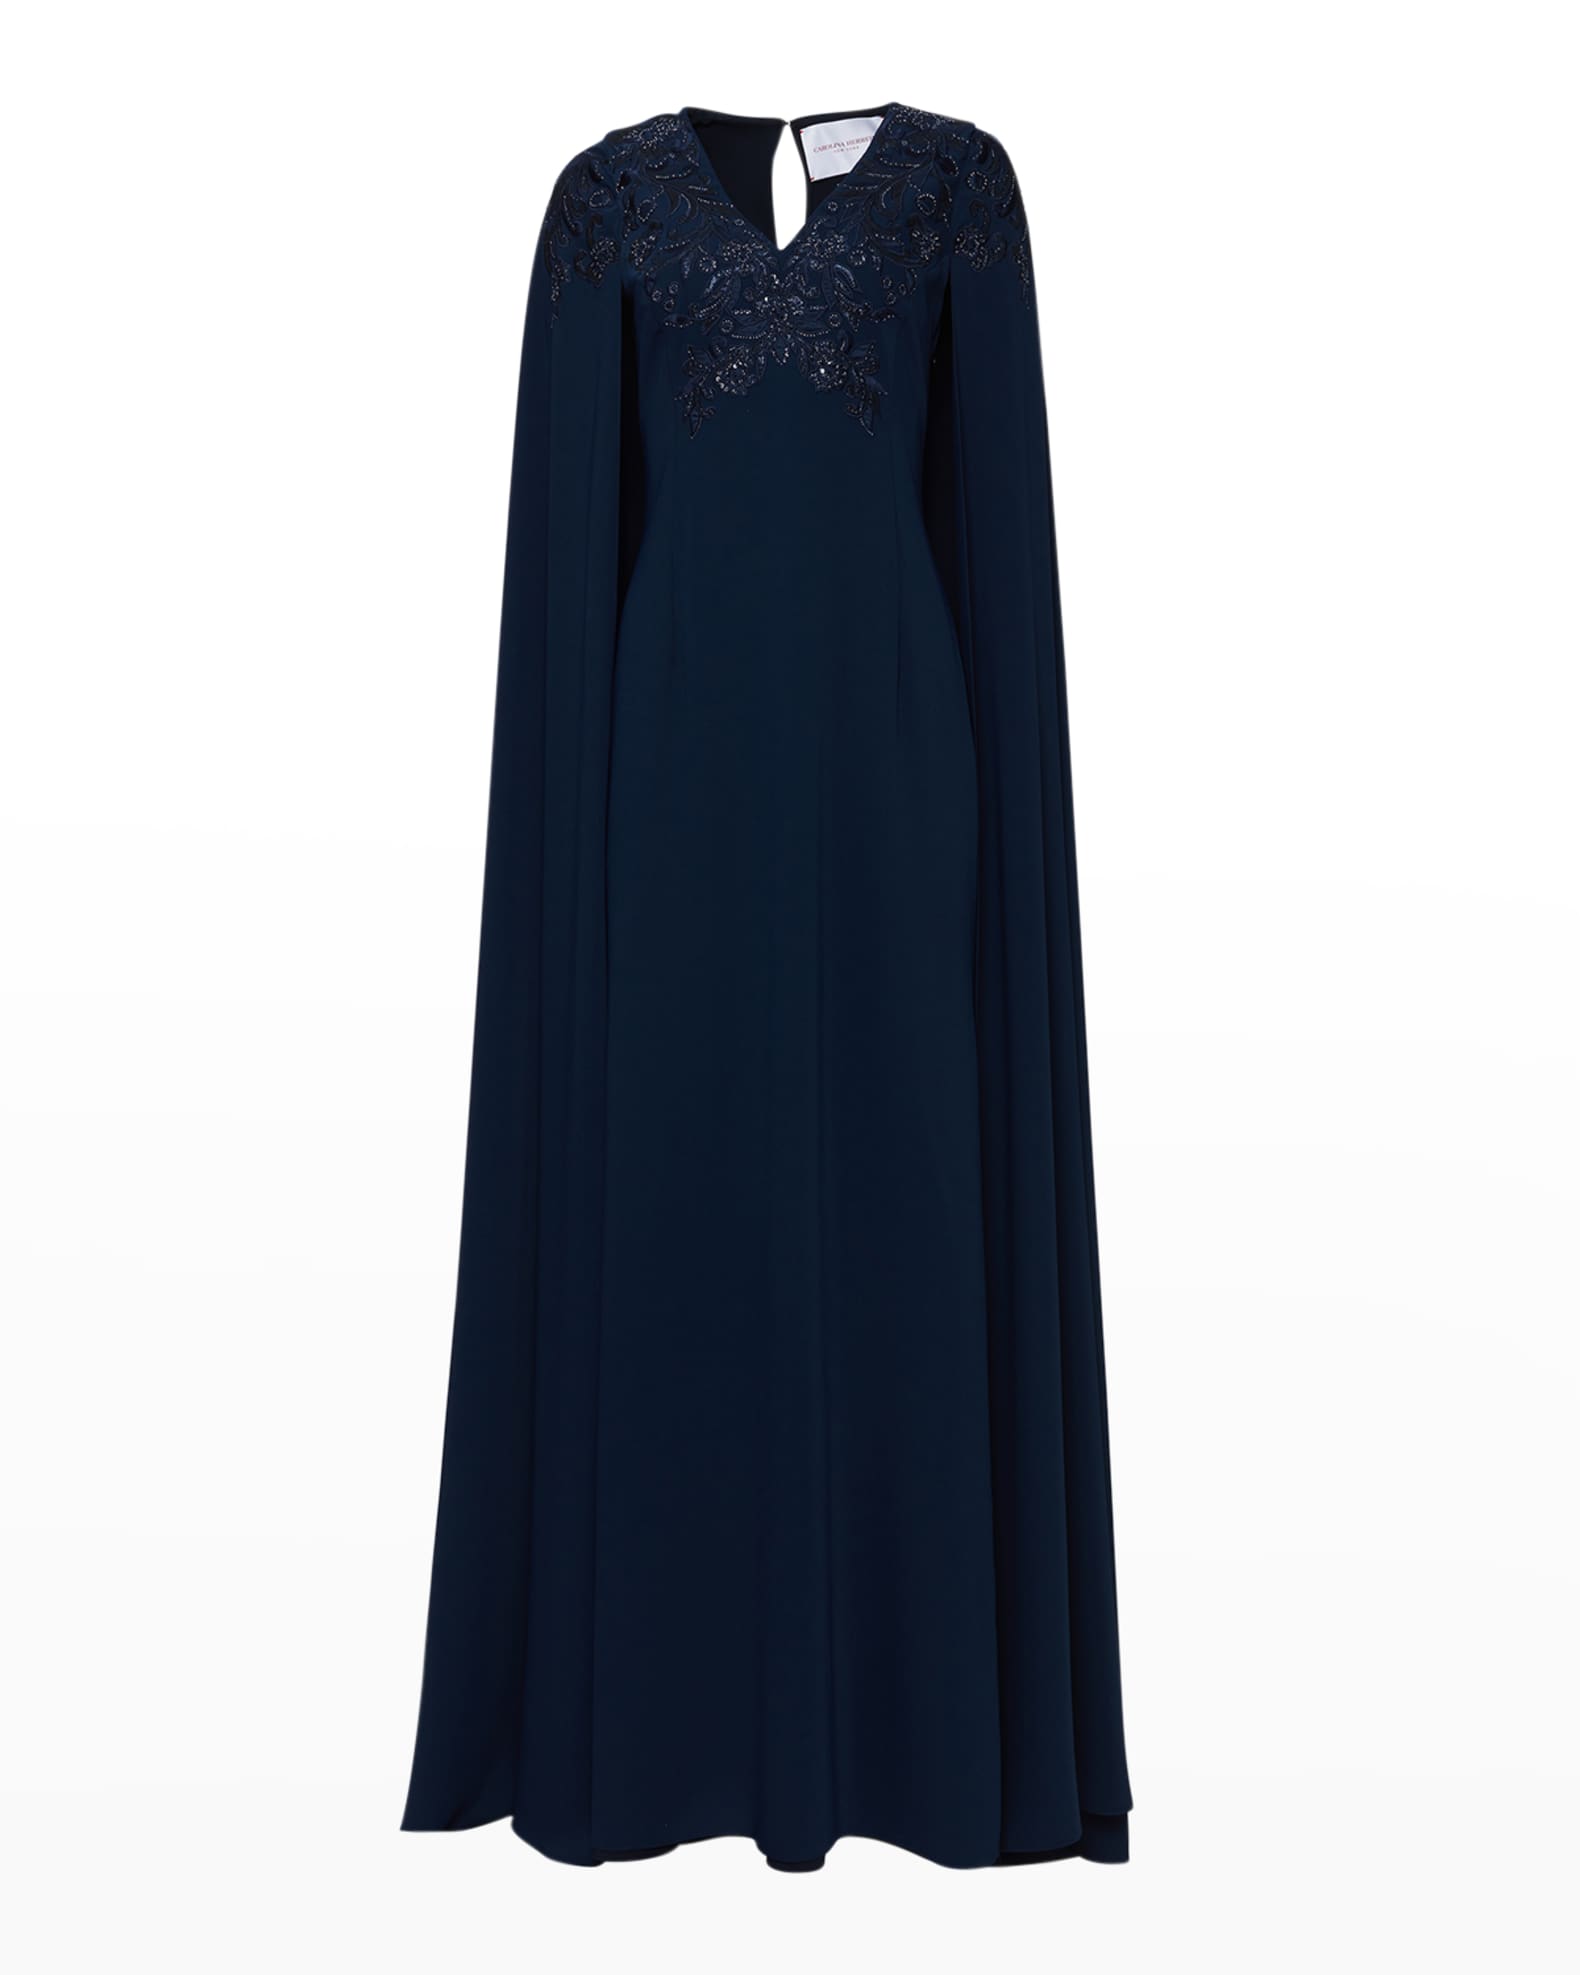 Carolina Herrera Metallic Embroidered Cape Gown | Neiman Marcus